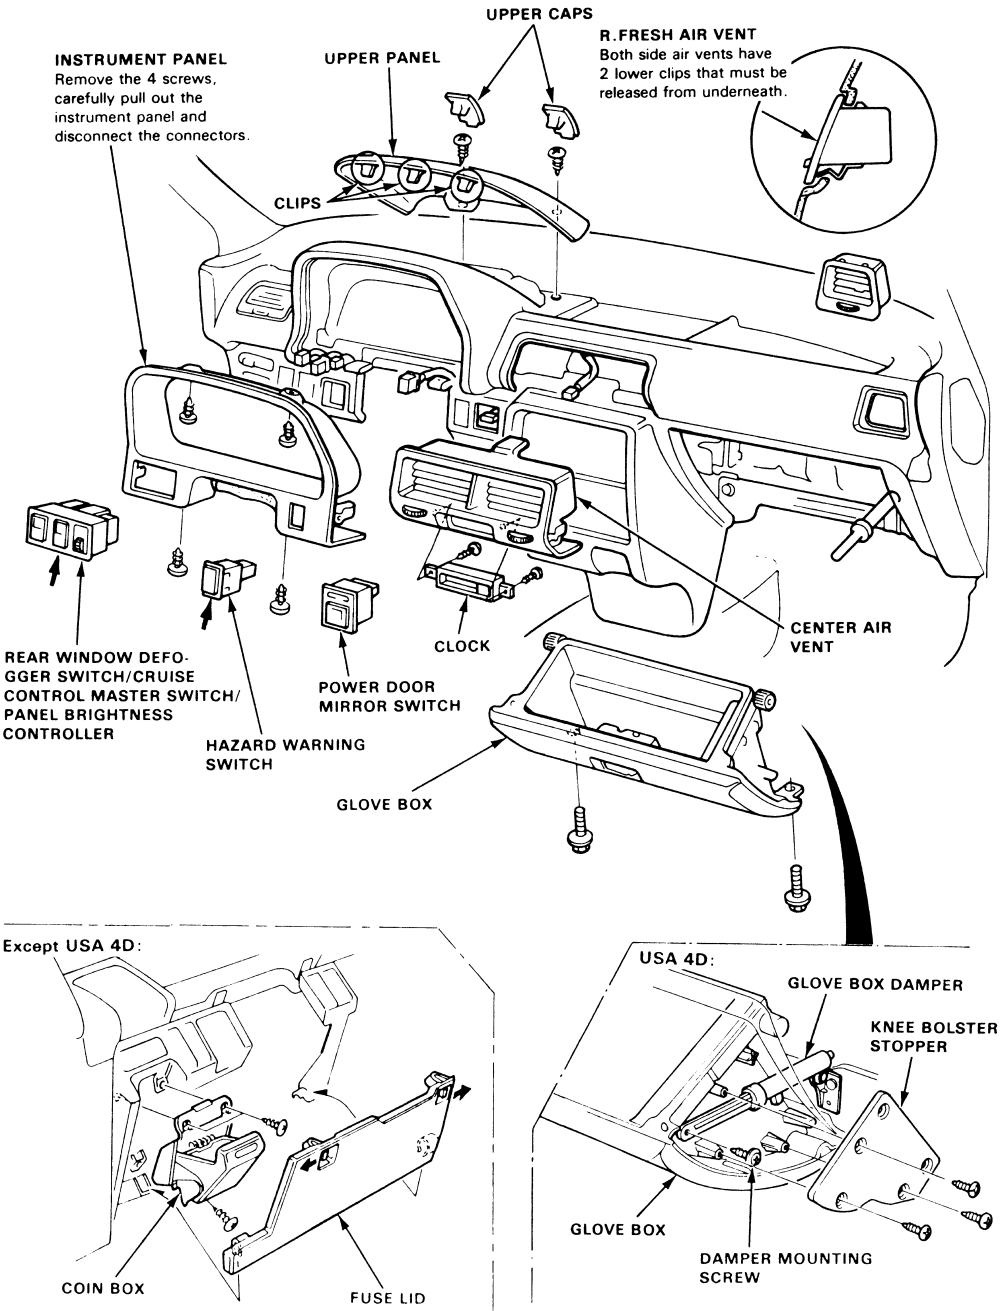 1995 Honda civic alarm wiring #4